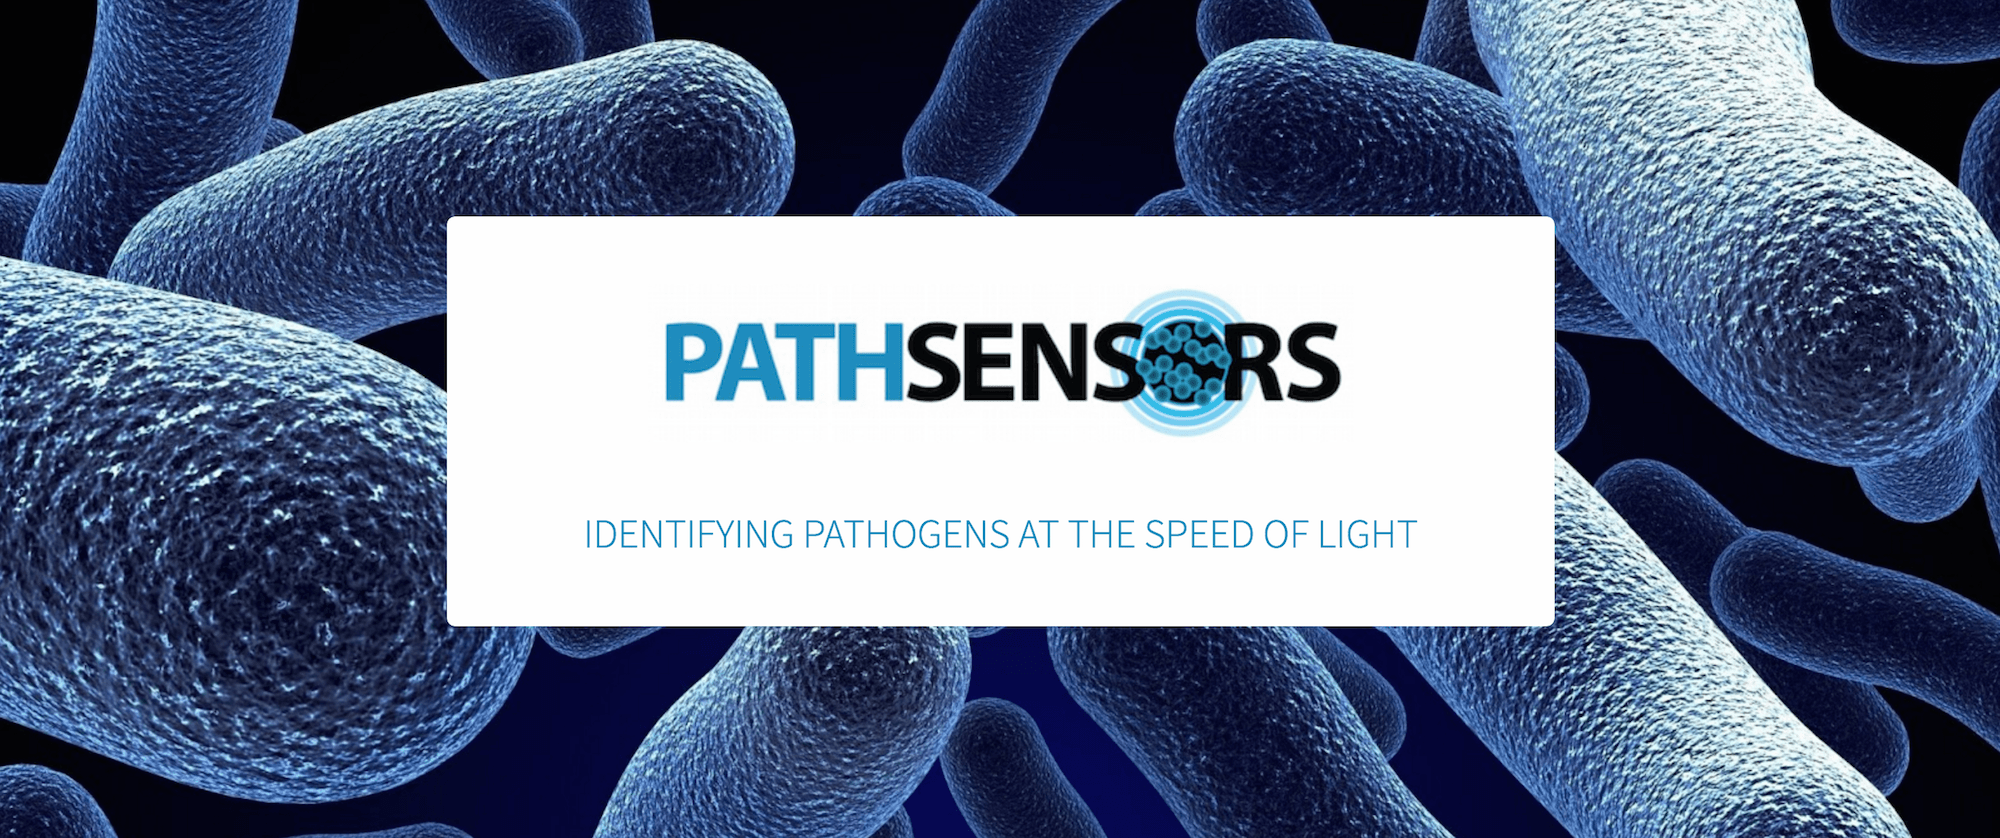 Pathogen Logo - Bio-Tech Firm PathSensors Enters Fast-Growing Chinese Pathogen ...